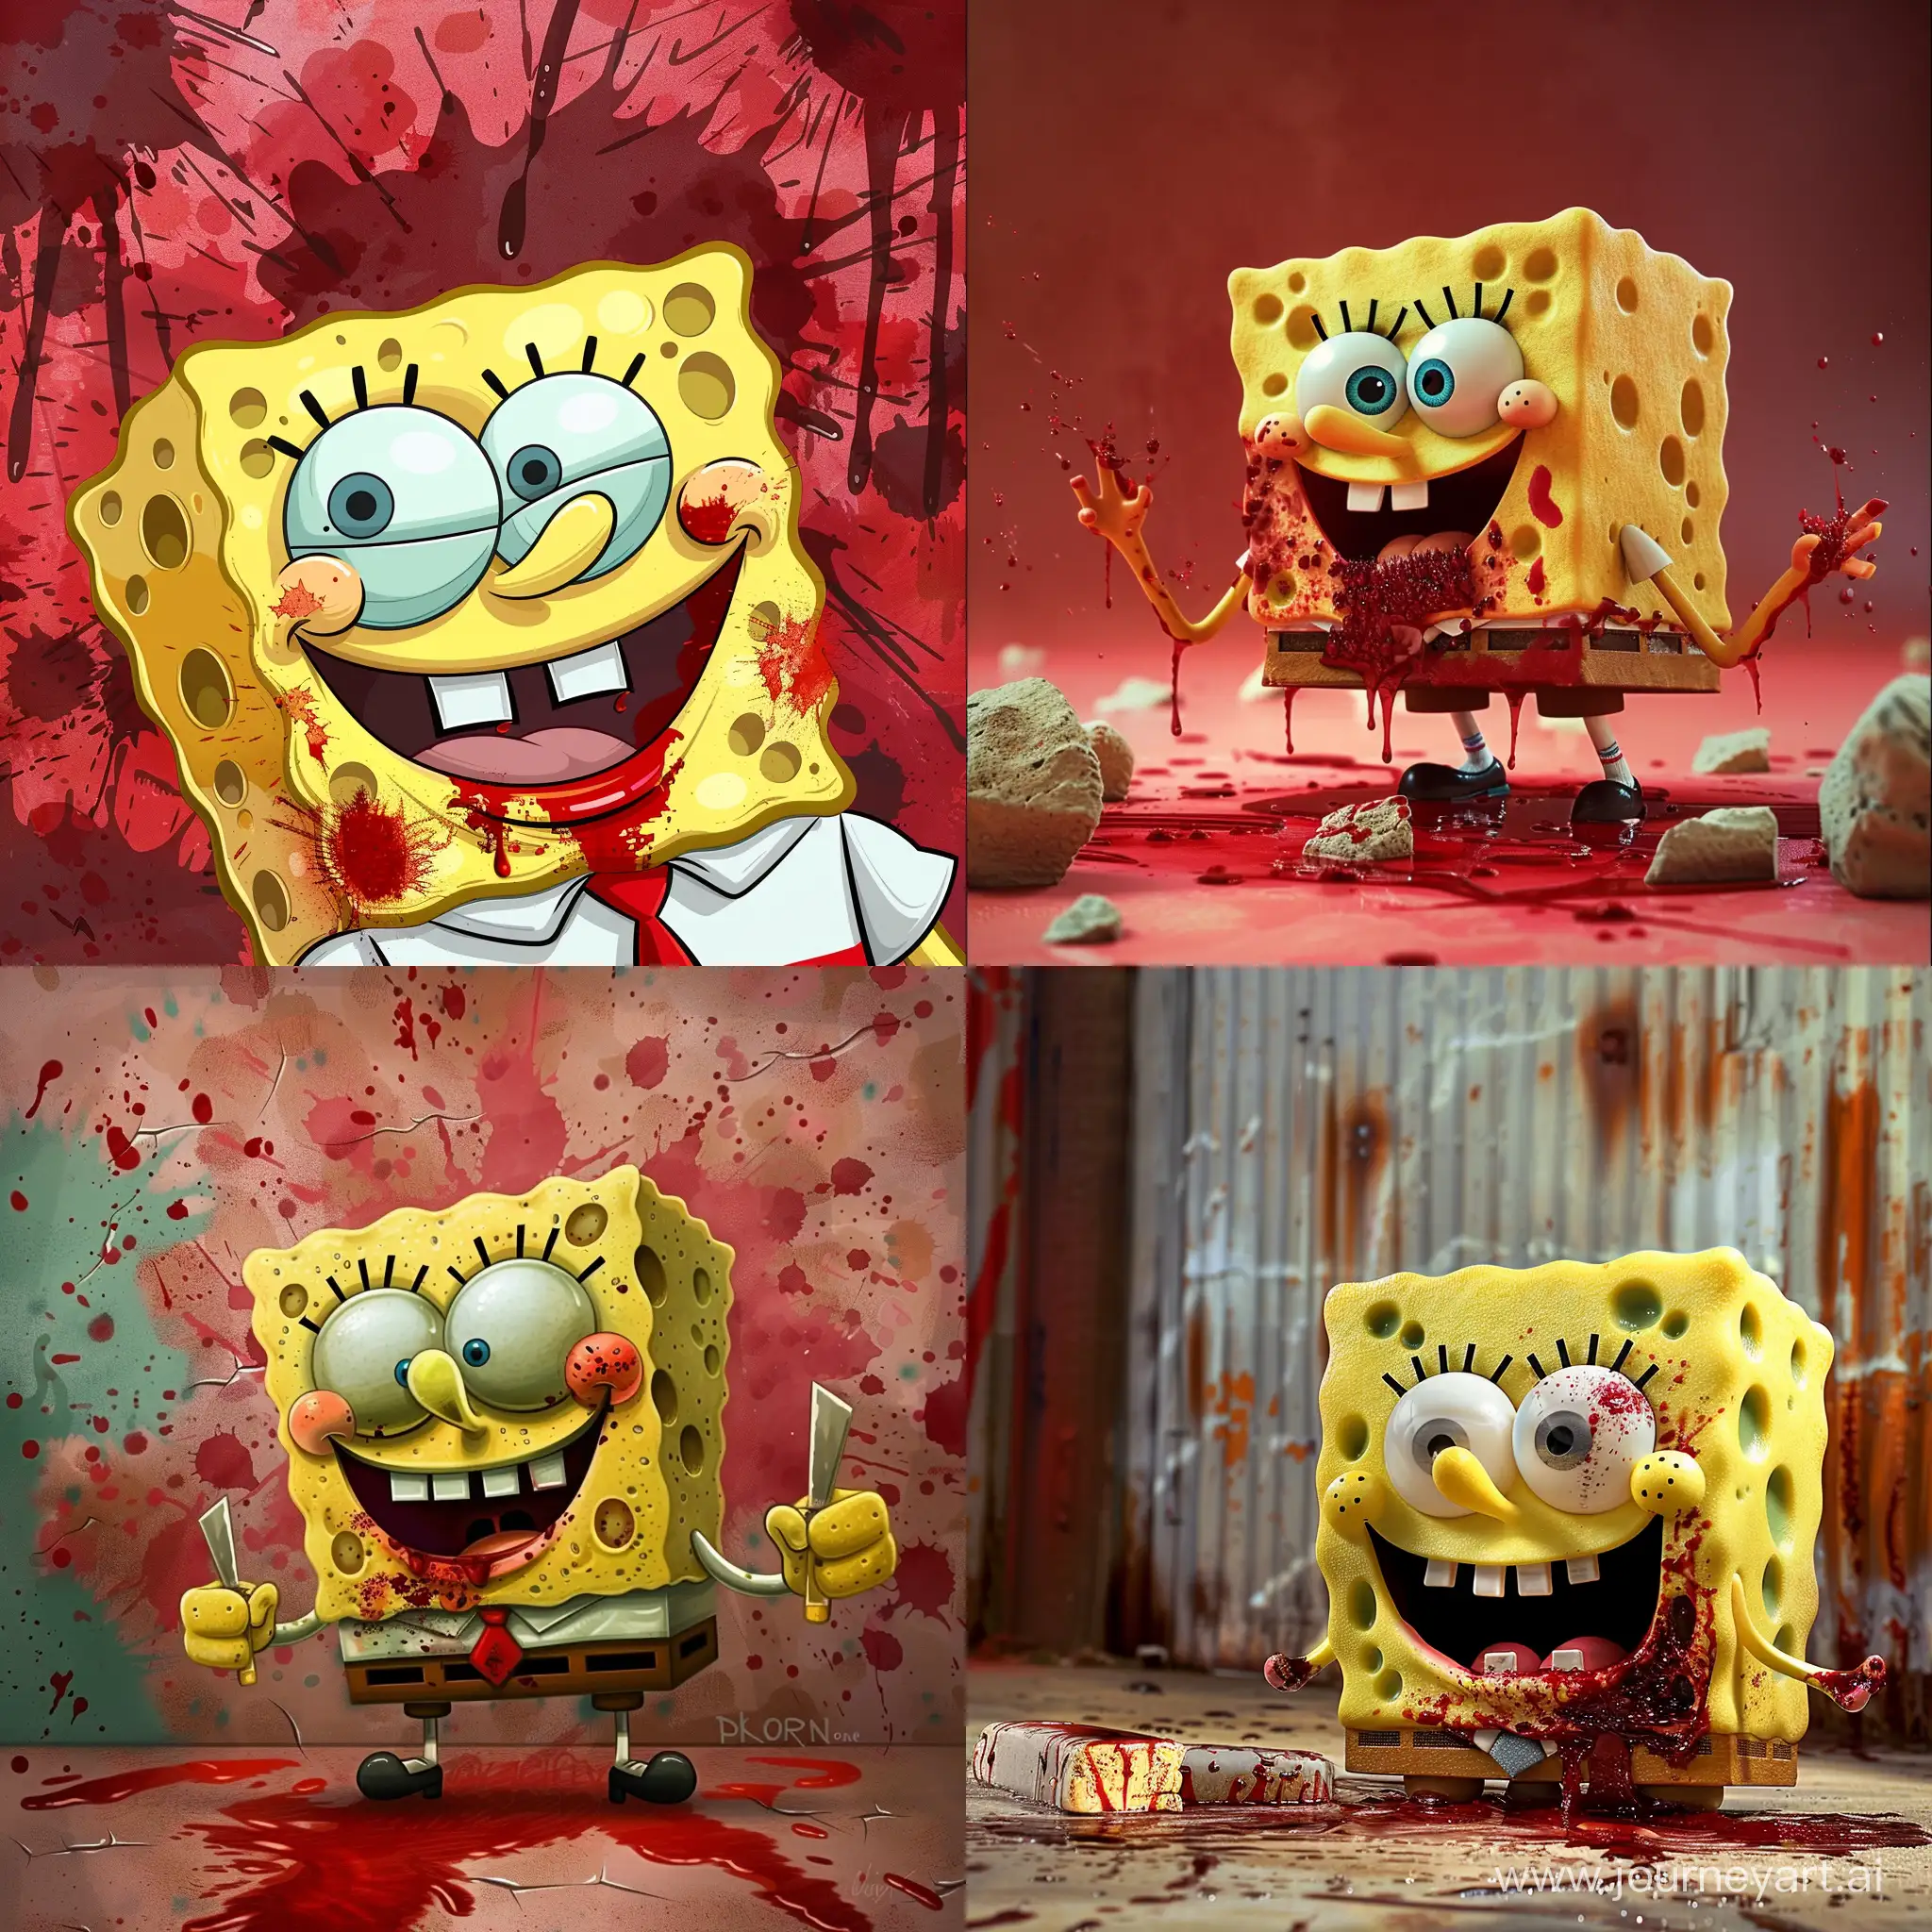 SpongeBob-Murders-Gary-Dark-Scene-with-Blood-Splatter